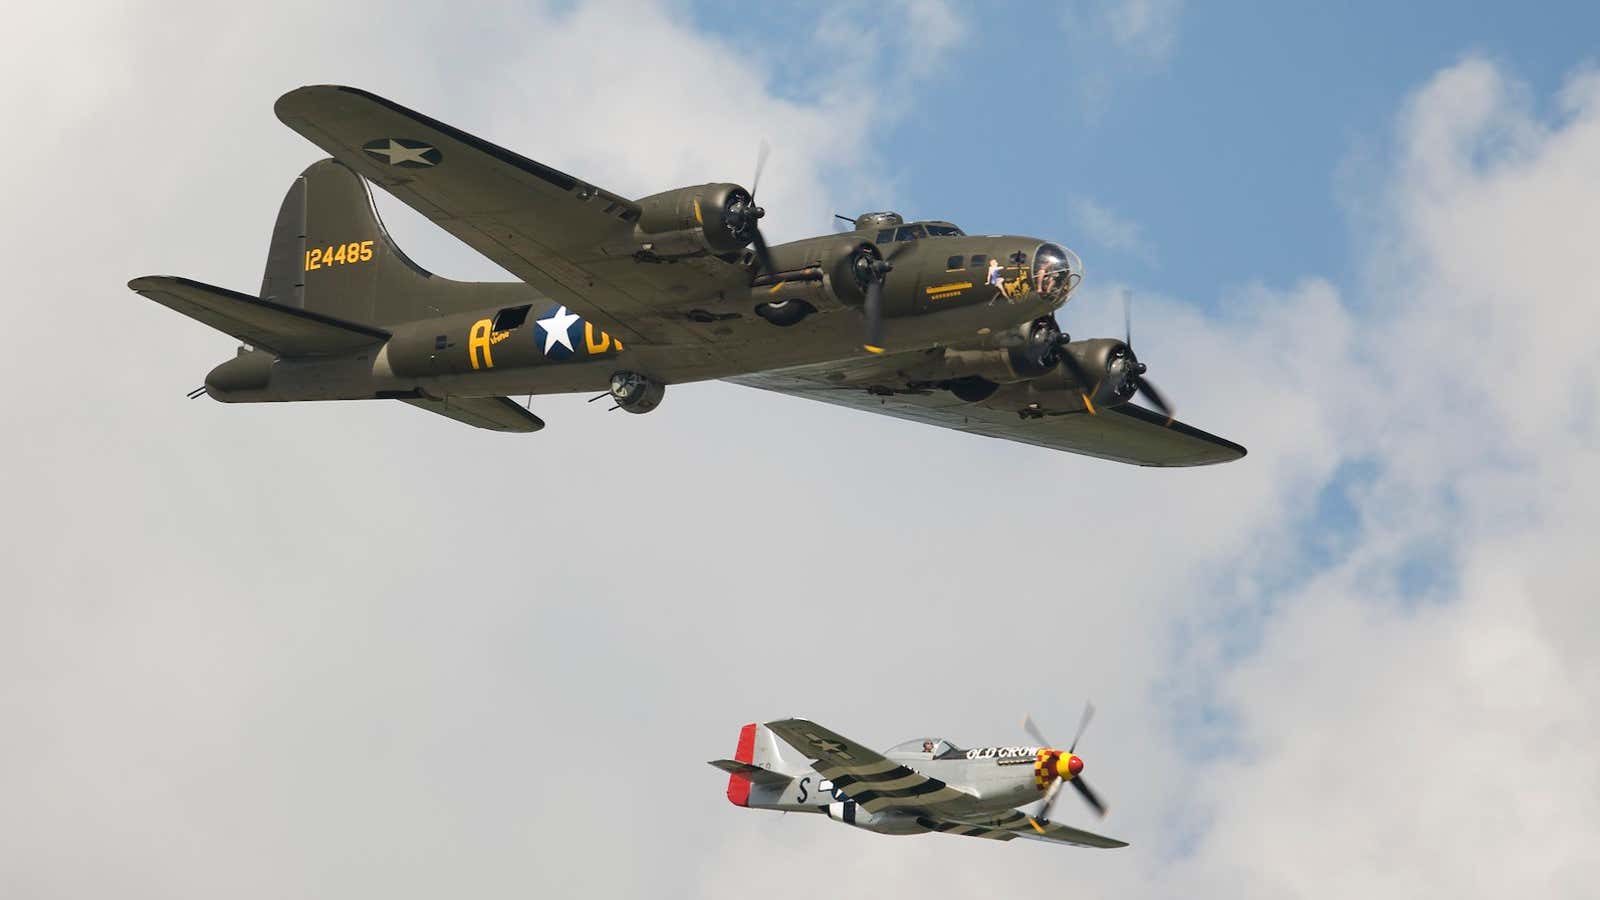 The B-17.